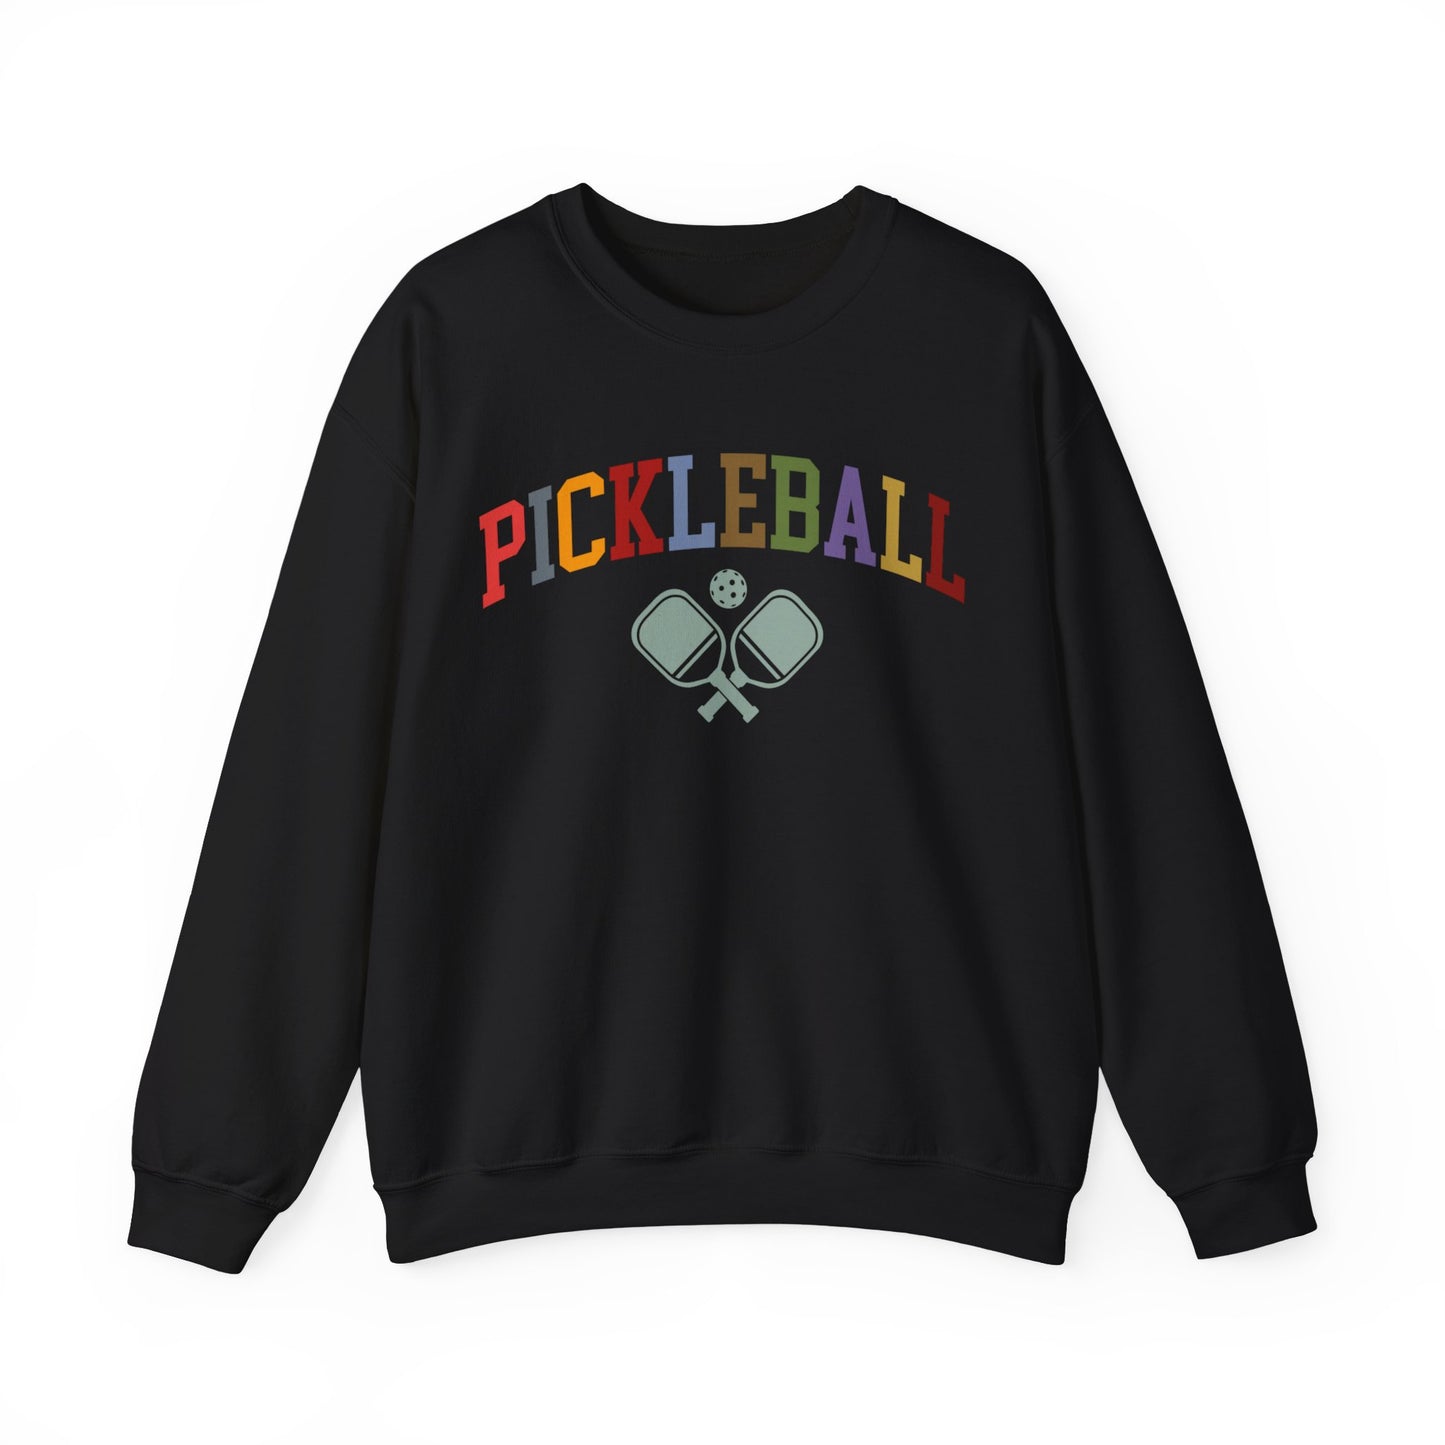 Play Pickleball Sweatshirt for Pickleball Player, Cute Pickleball Sweatshirt for Wife, Retro Pickleball Gift for Pickleball Lover, S1469